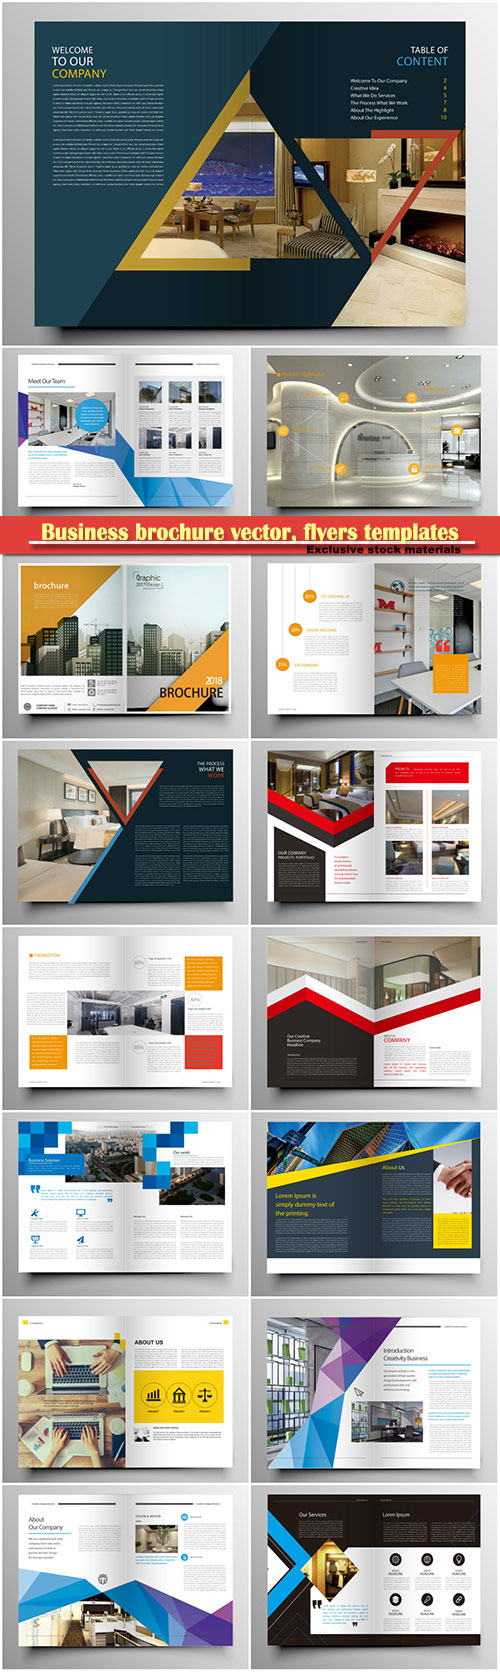 Business brochure vector, flyers templates, report cover design # 89